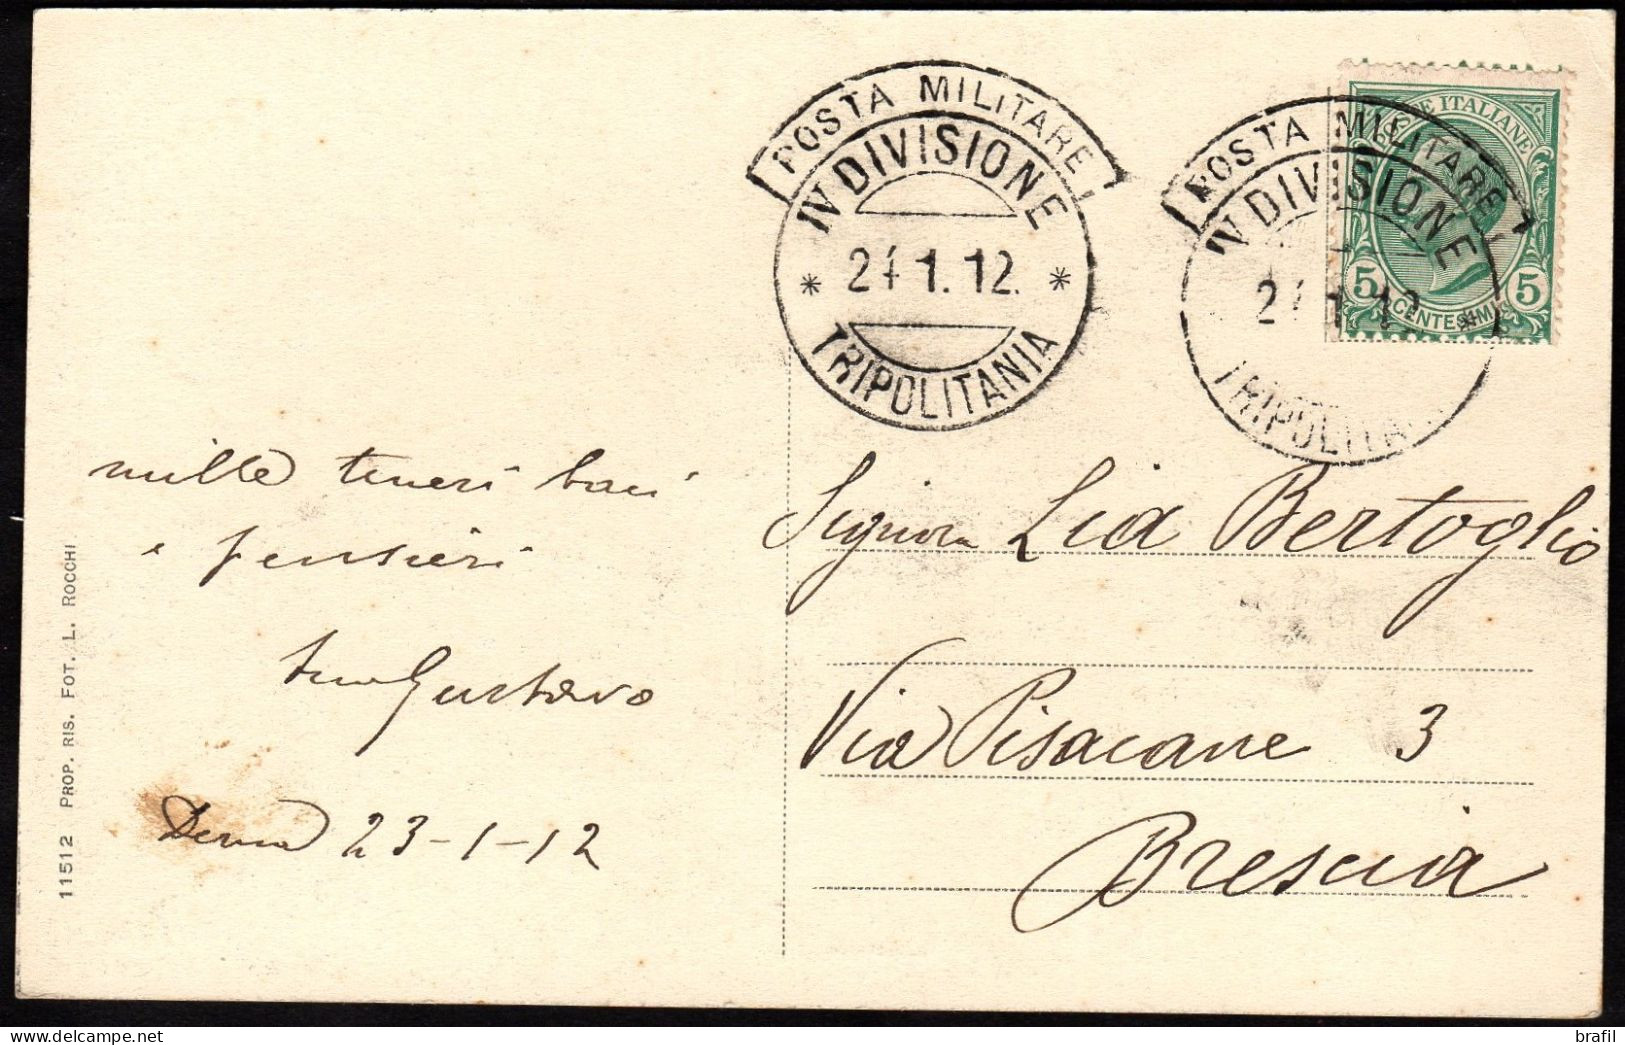 1912 Posta Militar4e IV Divisione Tripolitania Cartolina Da Derna Per Brescia - Military Mail (PM)